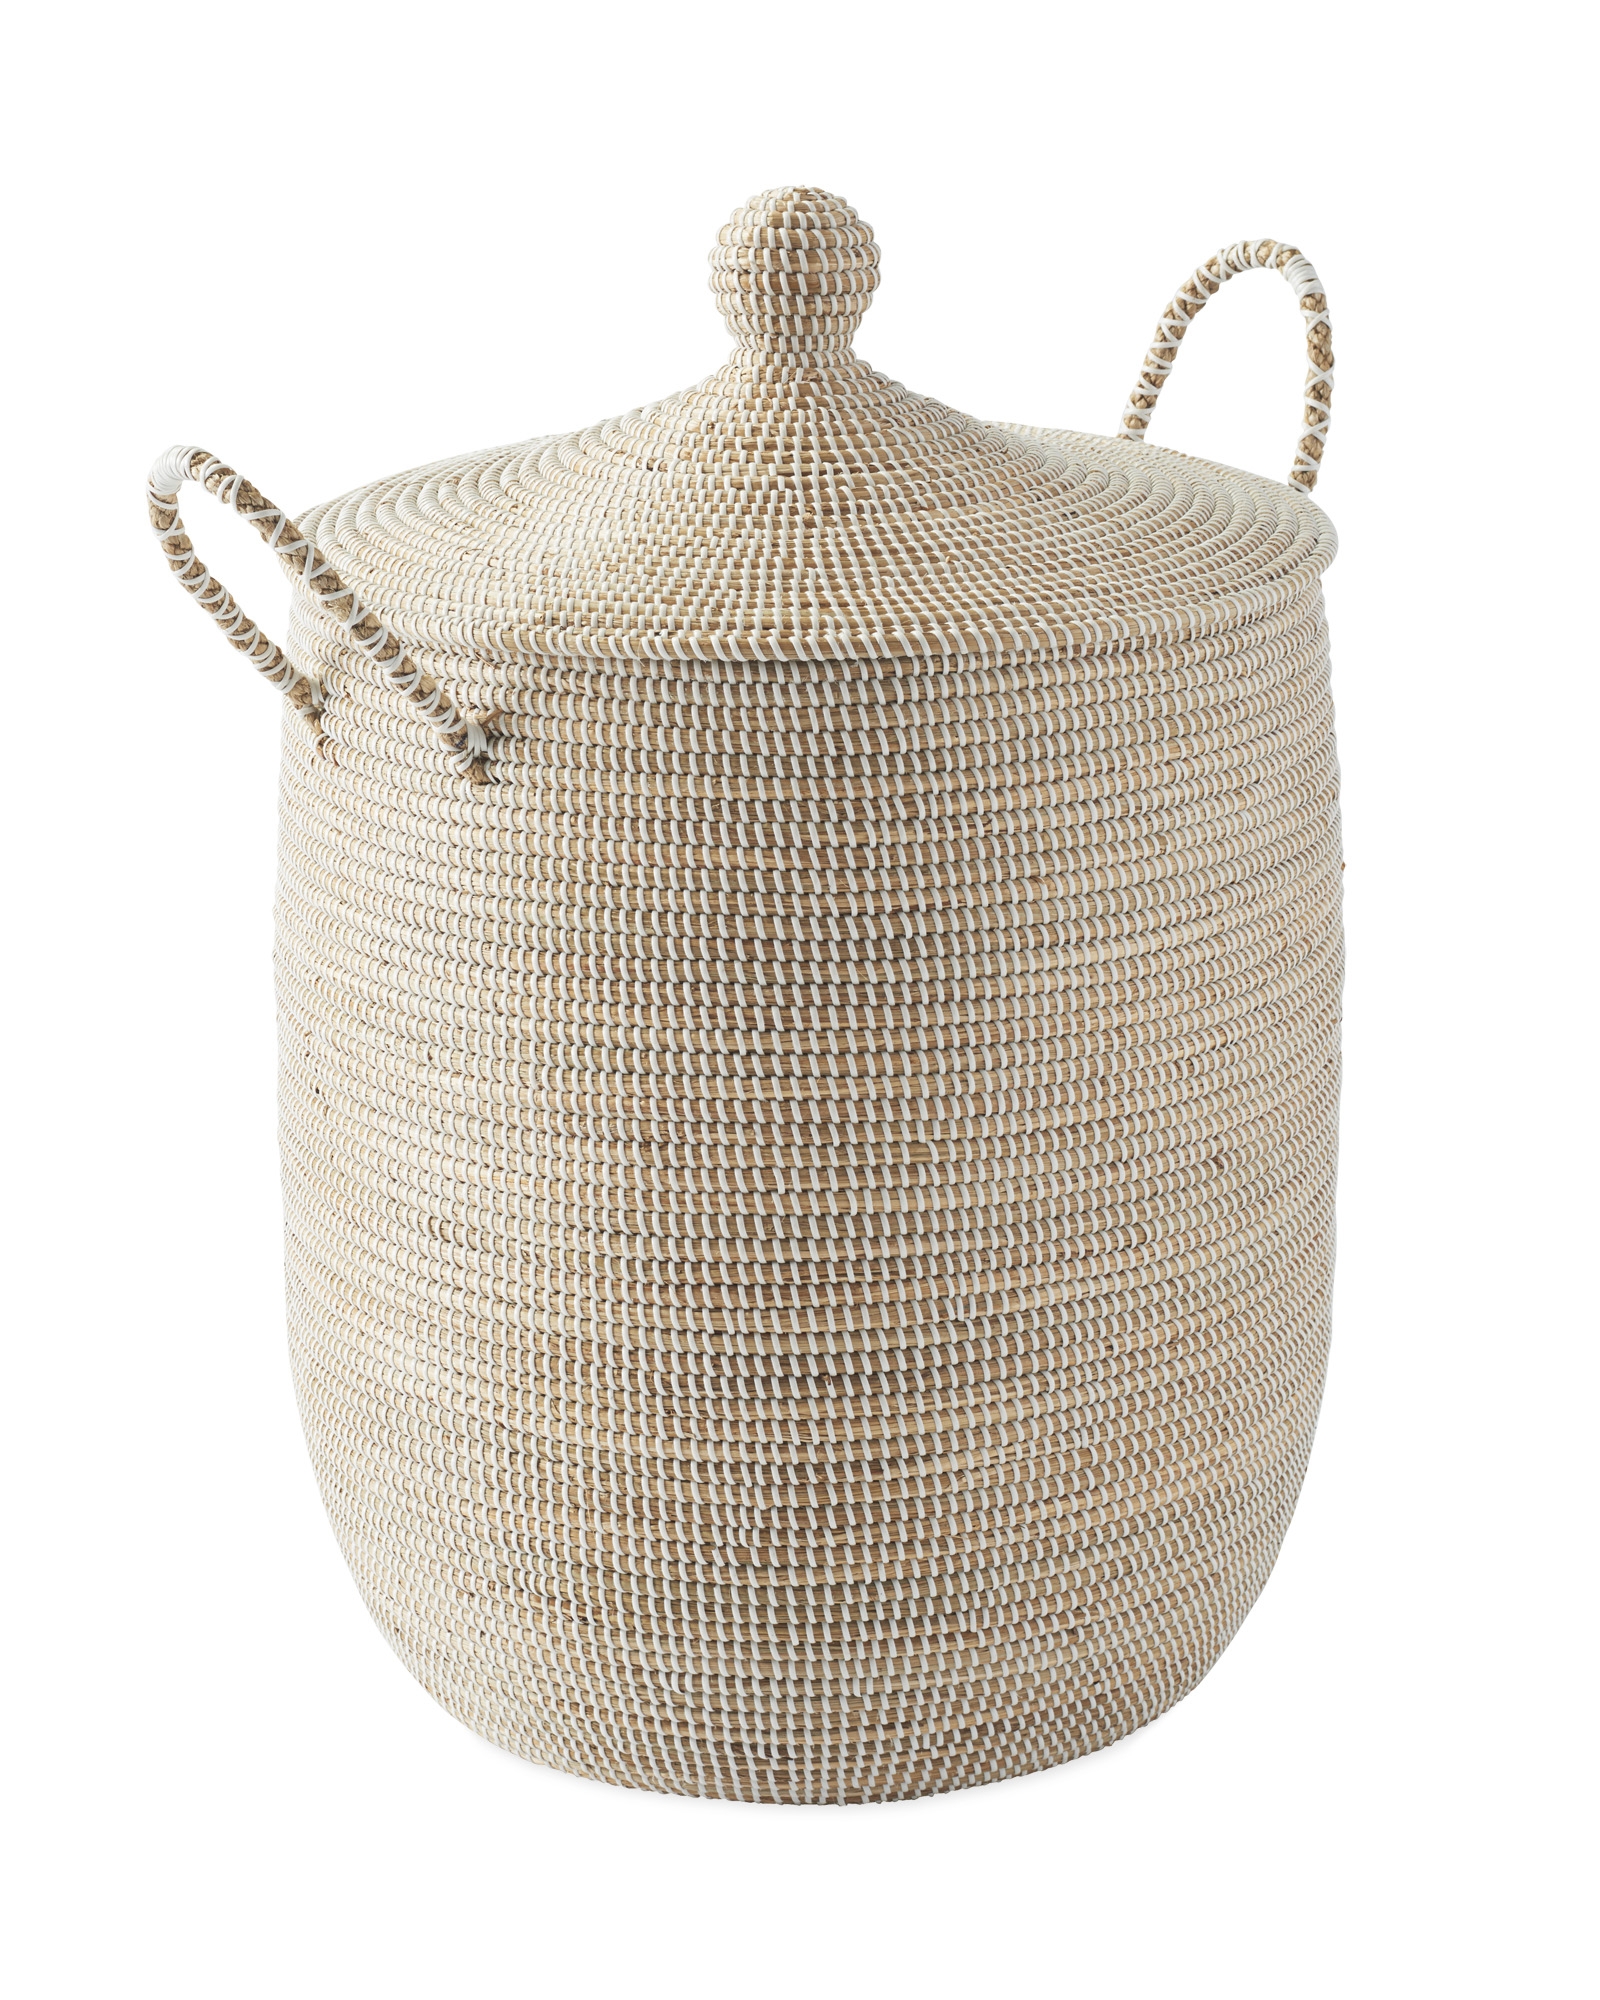 Solid La Jolla Large Basket - White - Image 0